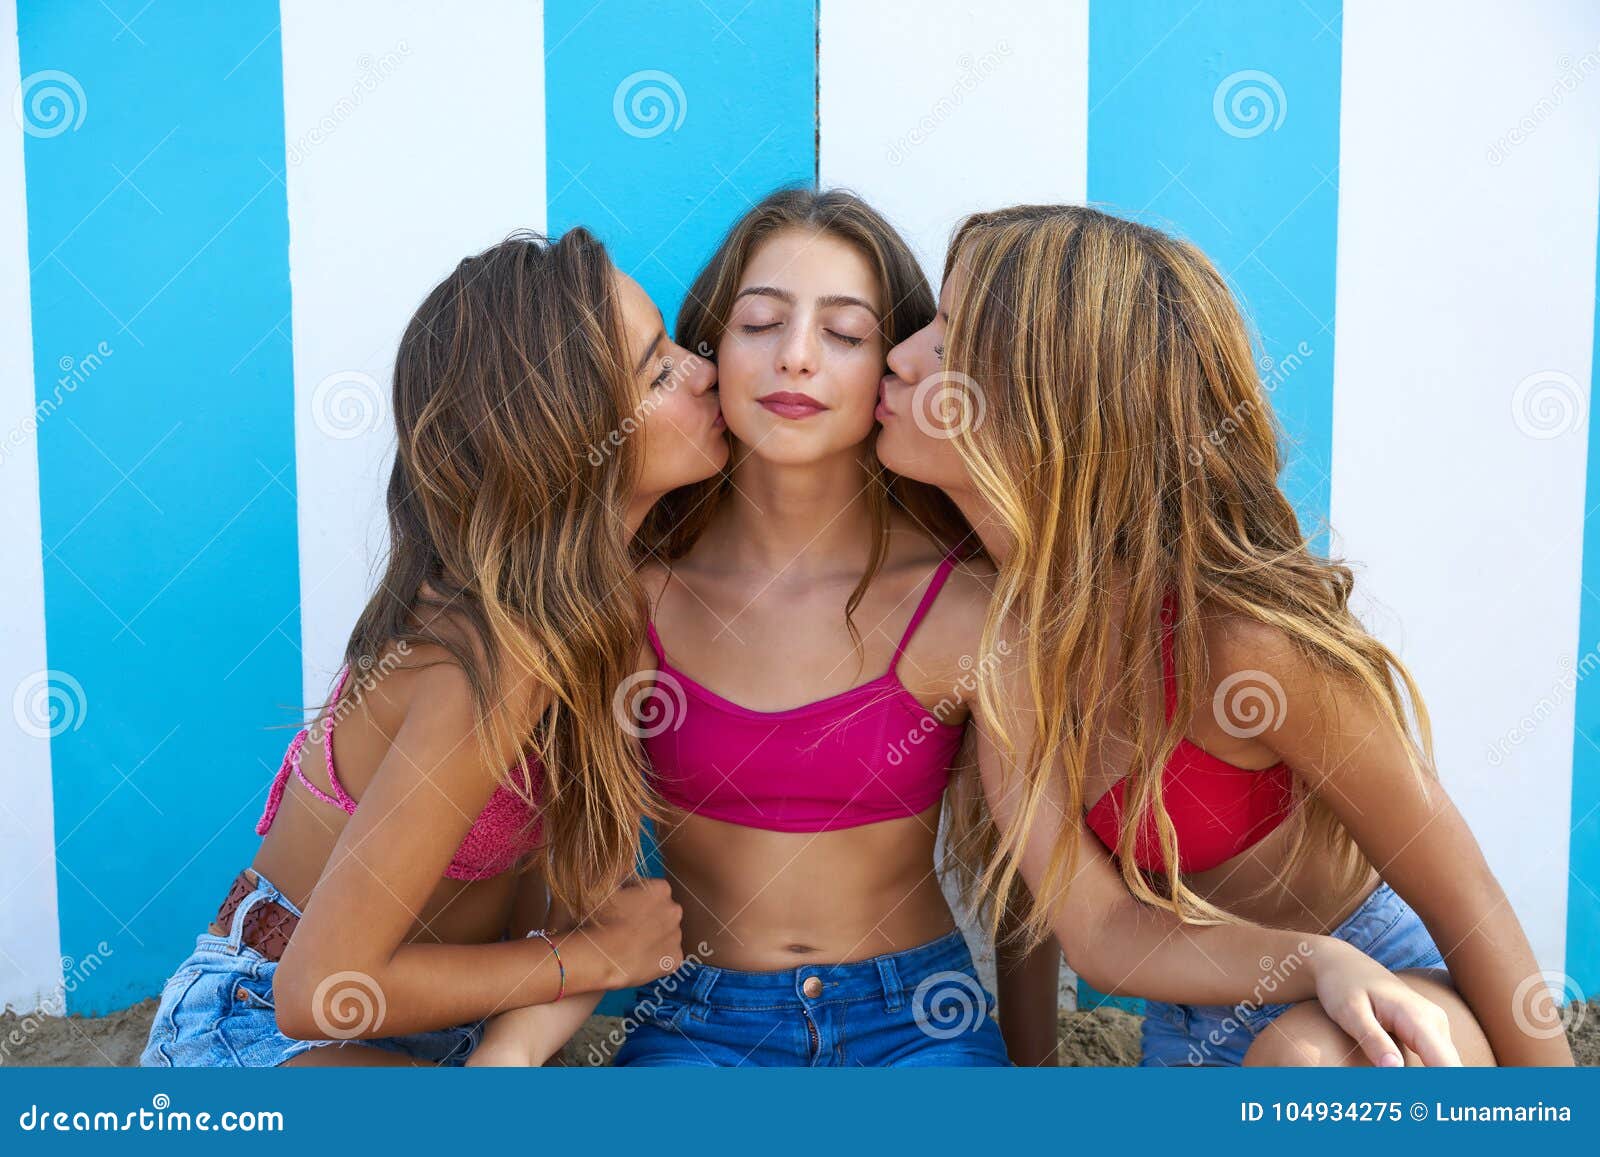 self shot girls kissing nude gallerie